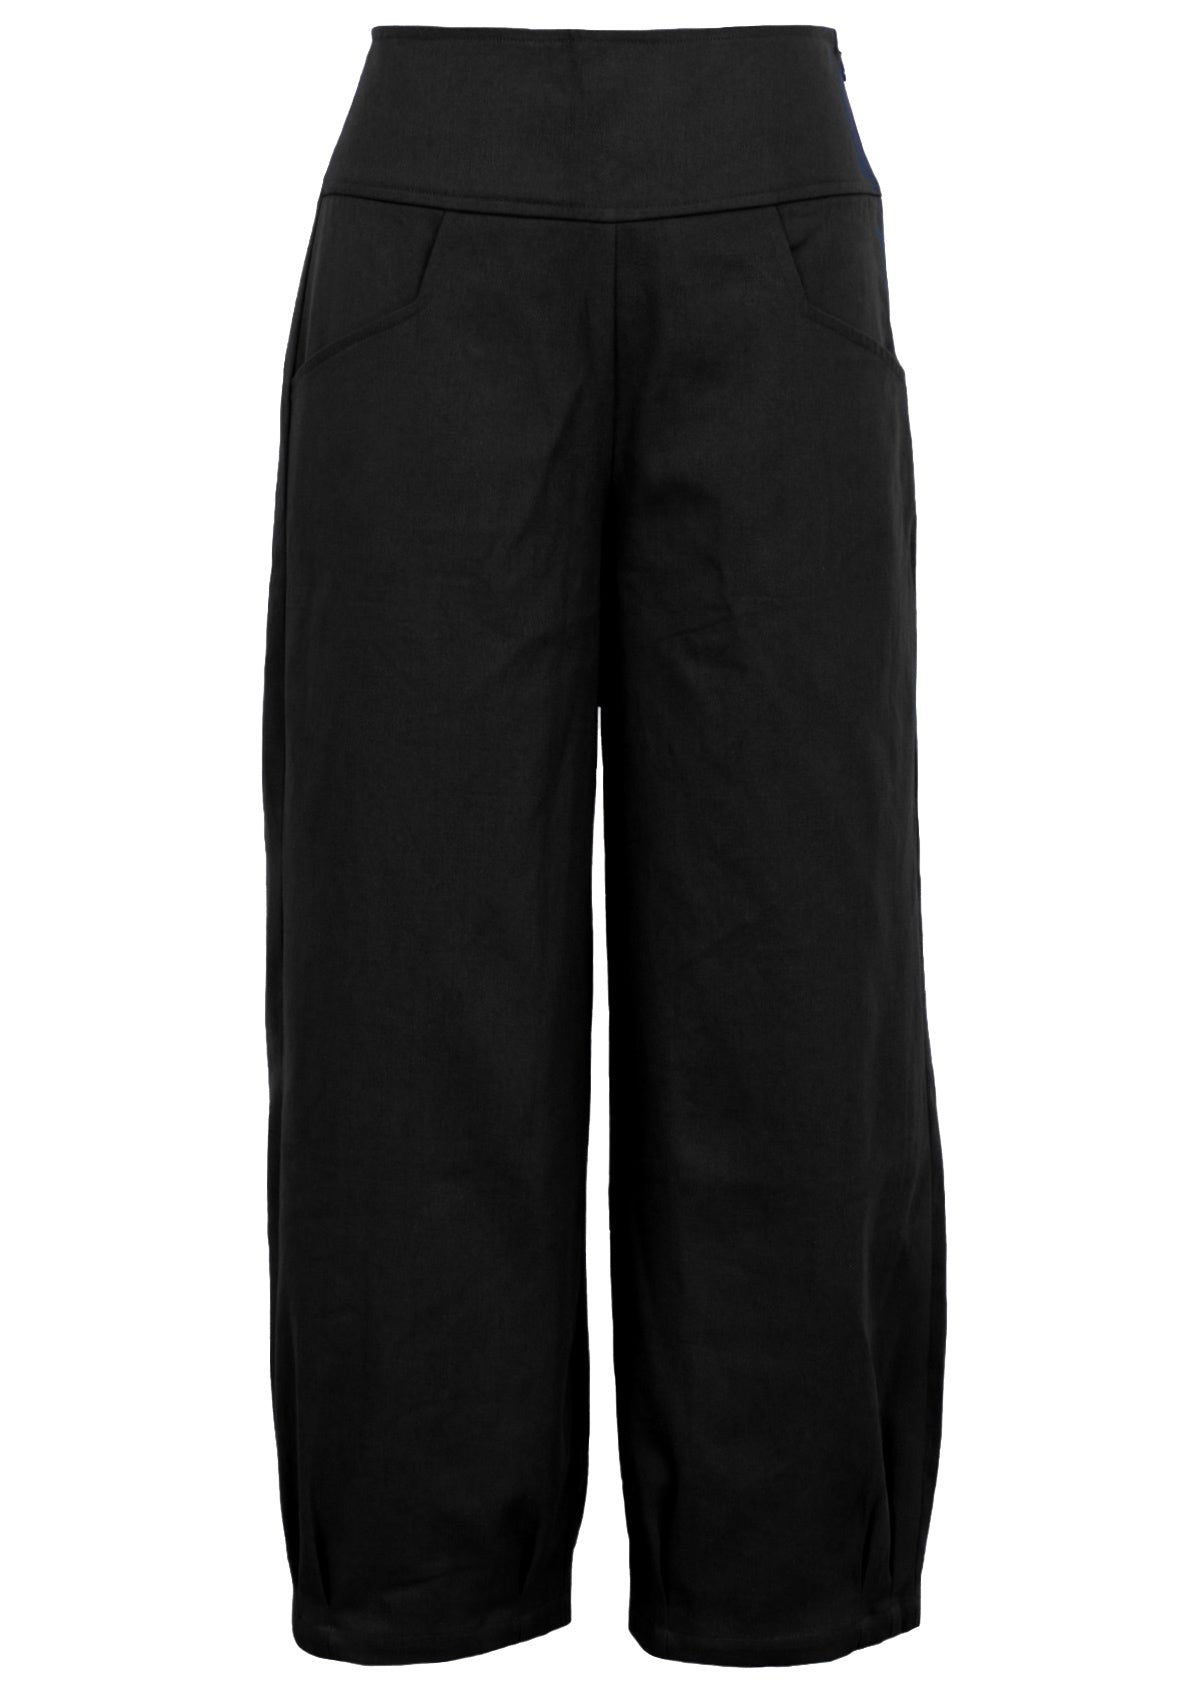 Nova Pants Black front